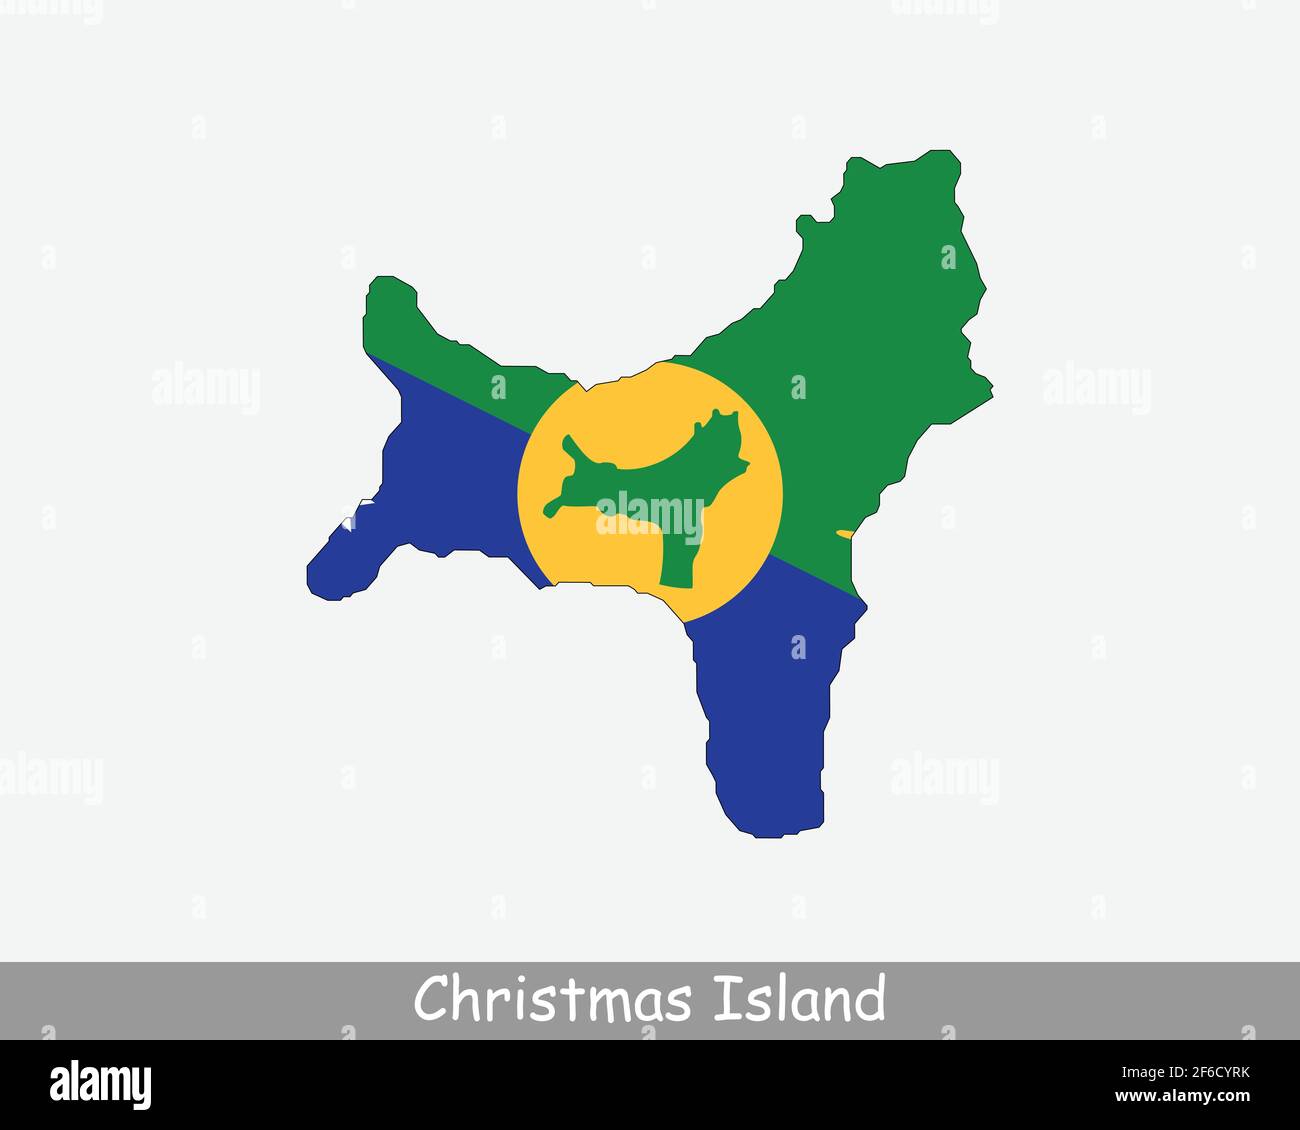 Christmas Island Map Flag. Map of Christmas Island Australia flag isolated on white background. Australian Indian Ocean Territory. External territory Stock Vector